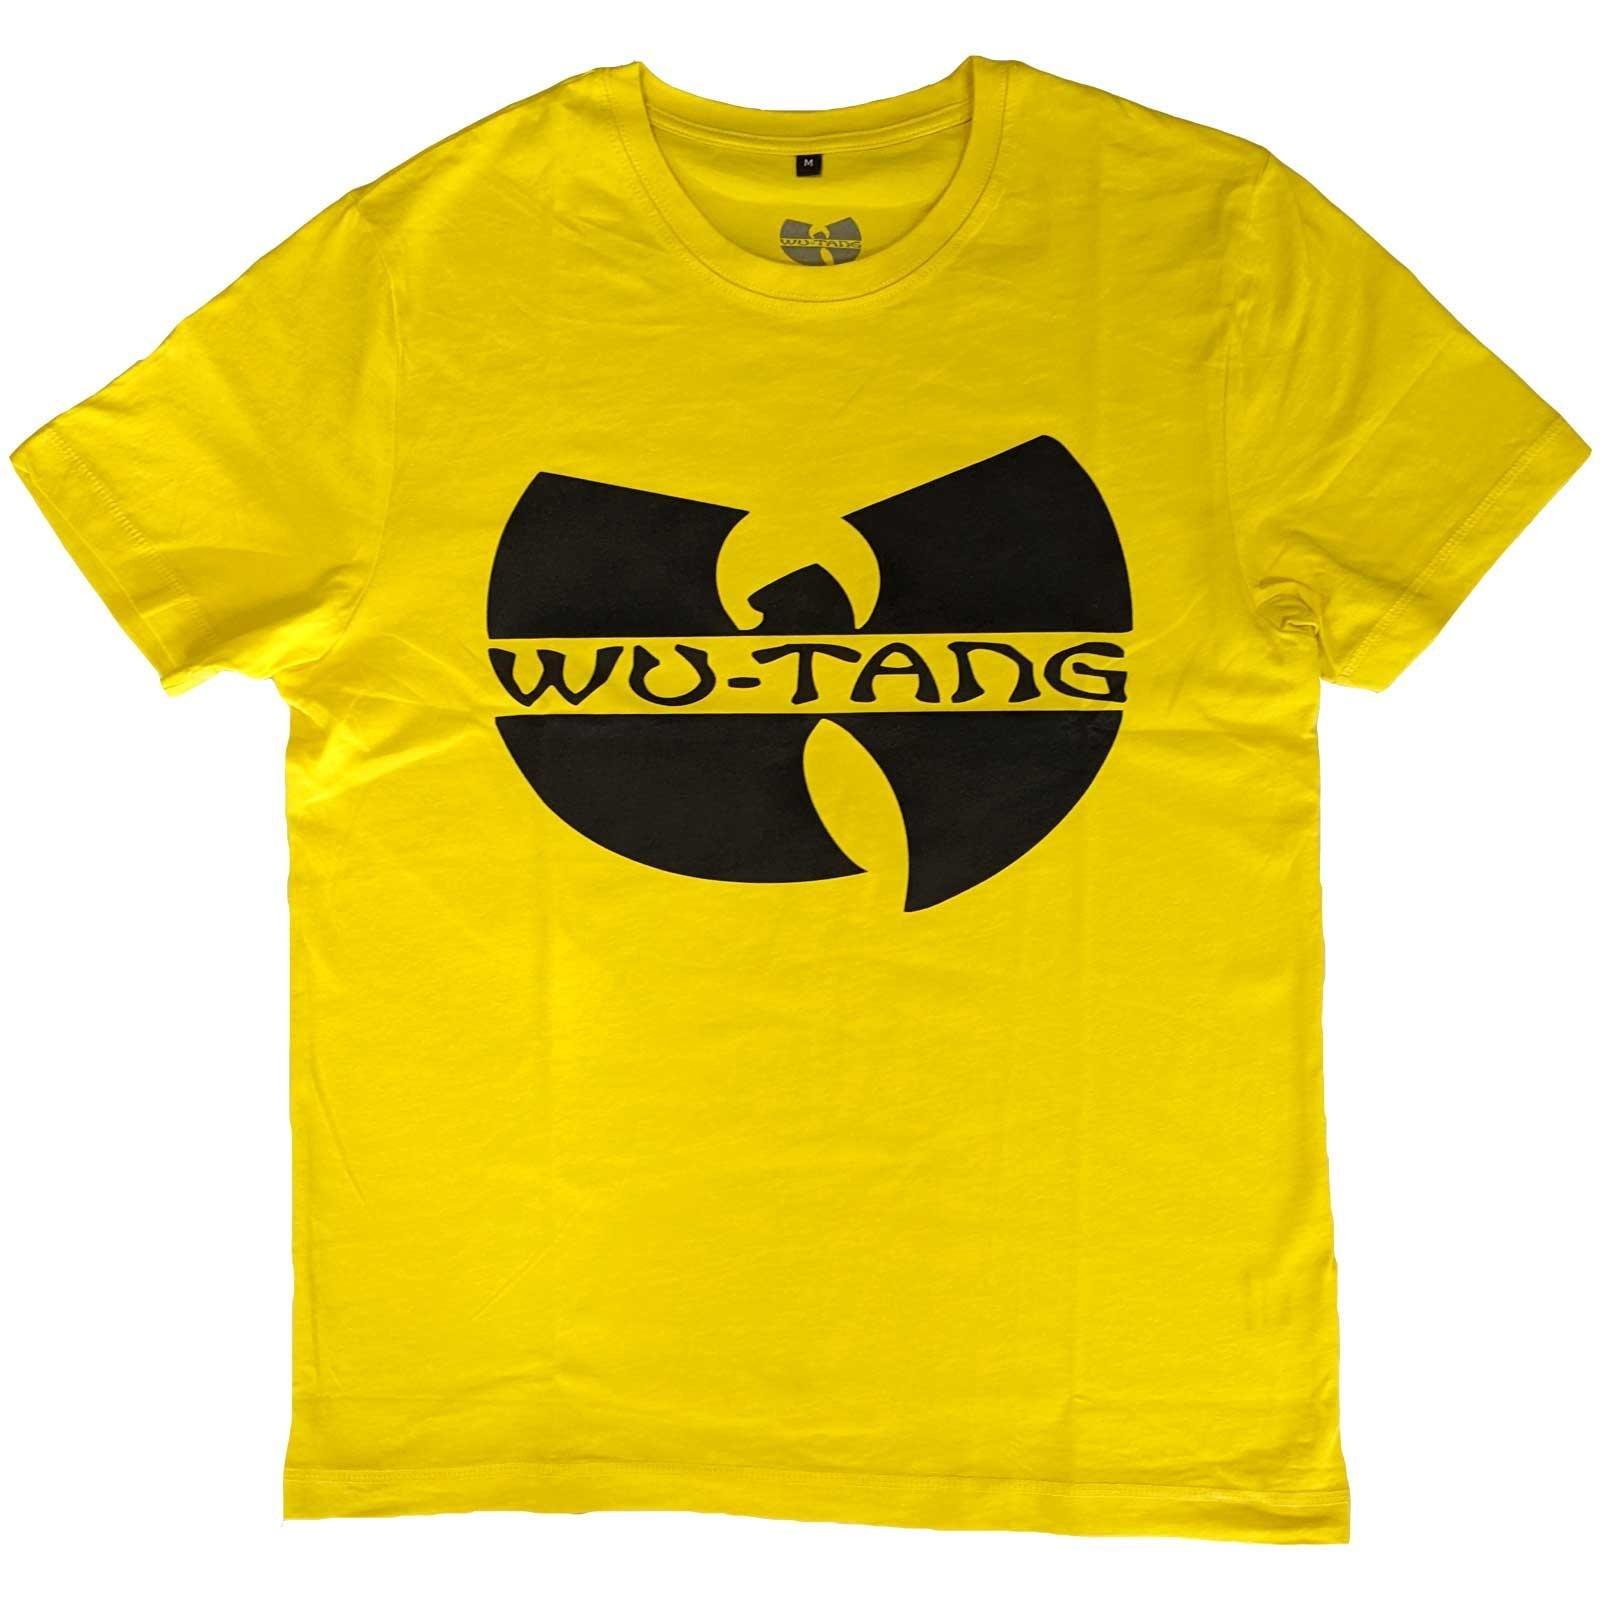 Tshirt Damen Gelb L von Wu-Tang Clan